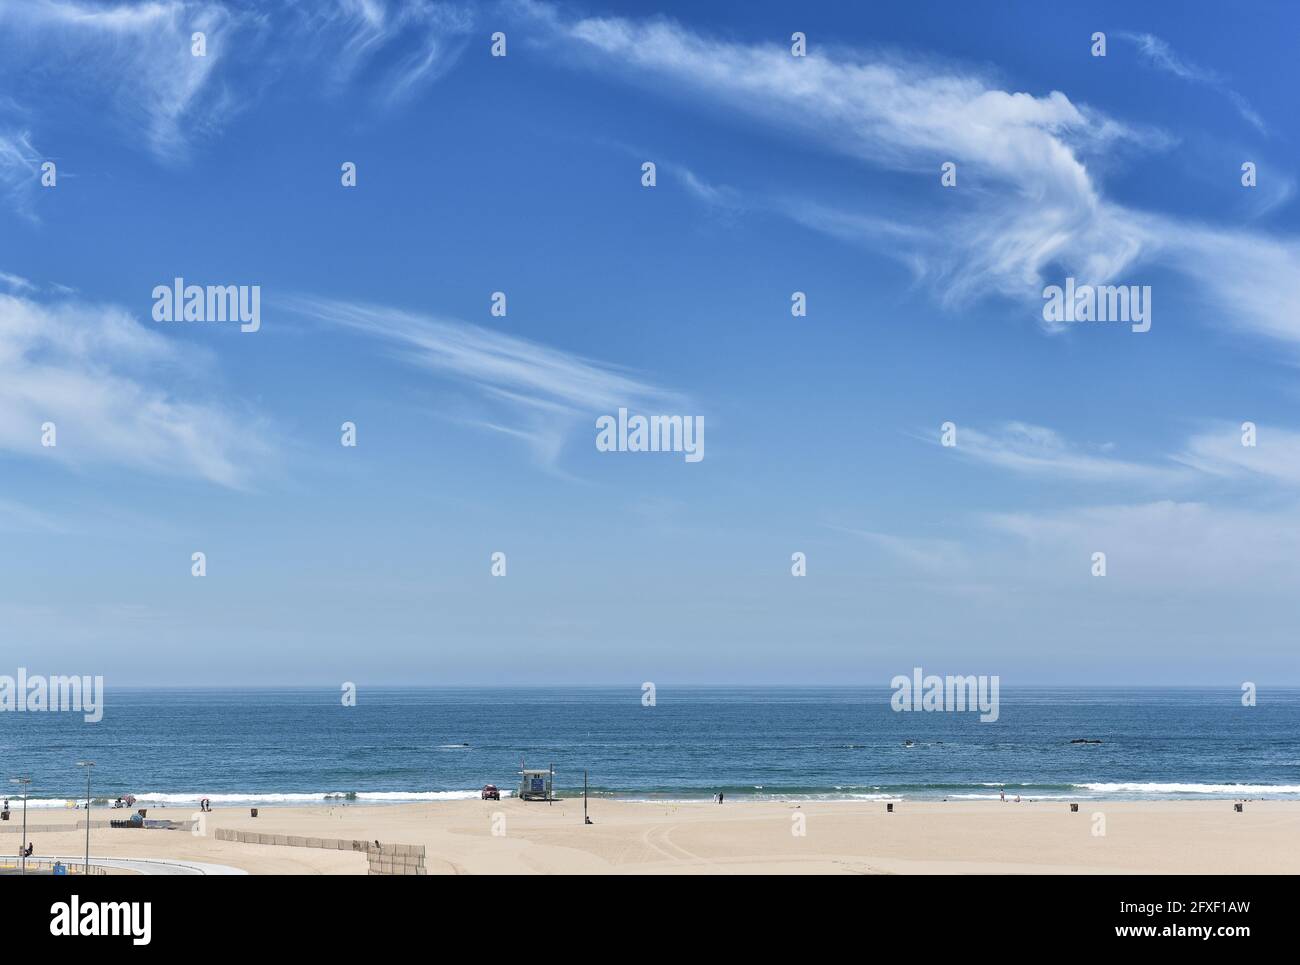 SANTA MONICA, CALIFORNIA - 25 MAY 2021: Beach at Santa Monica Bay looking out towards the horizon the blue cloudy sky. Stock Photo